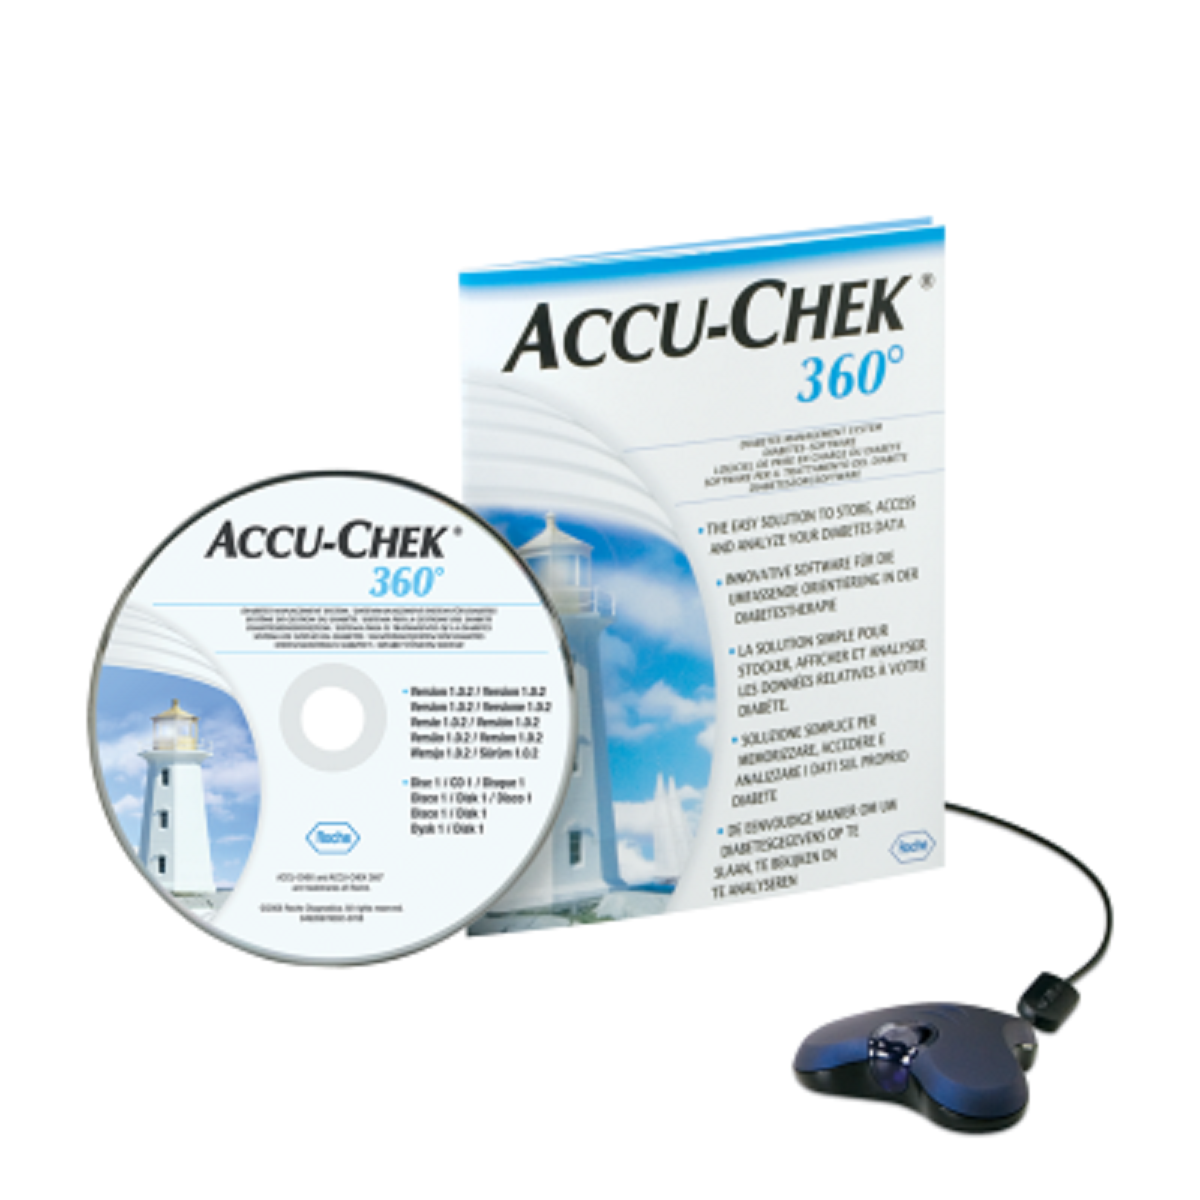 accu-chek guide software pc download